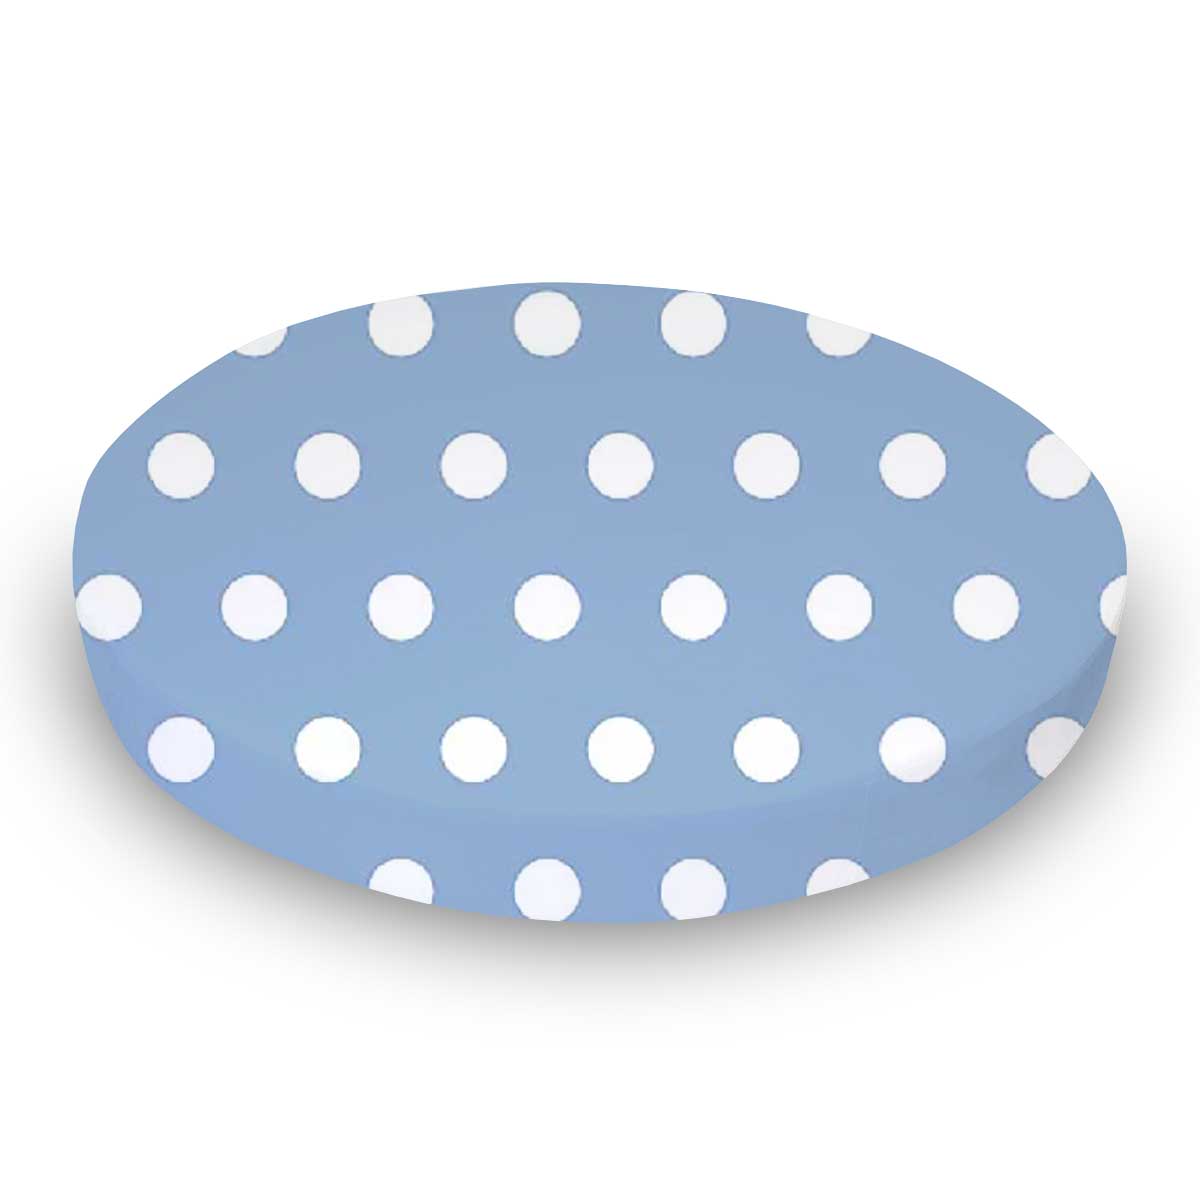 Oval Crib (Stokke Sleepi) - Polka Dots Blue - Fitted  Oval